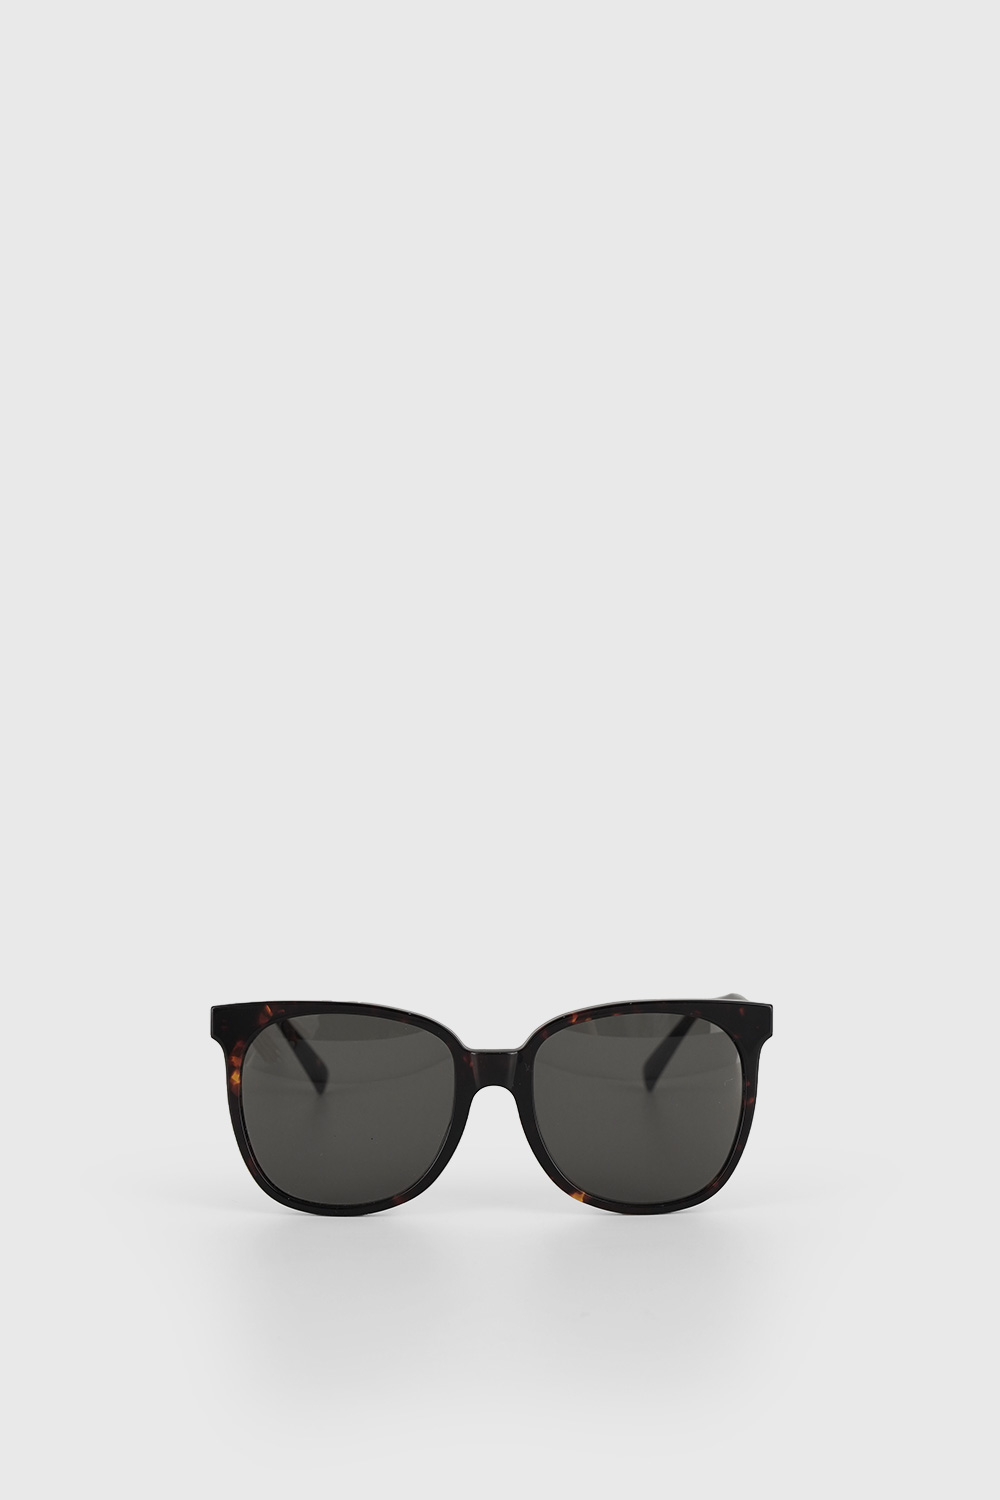 SENE sunglasses (limited)